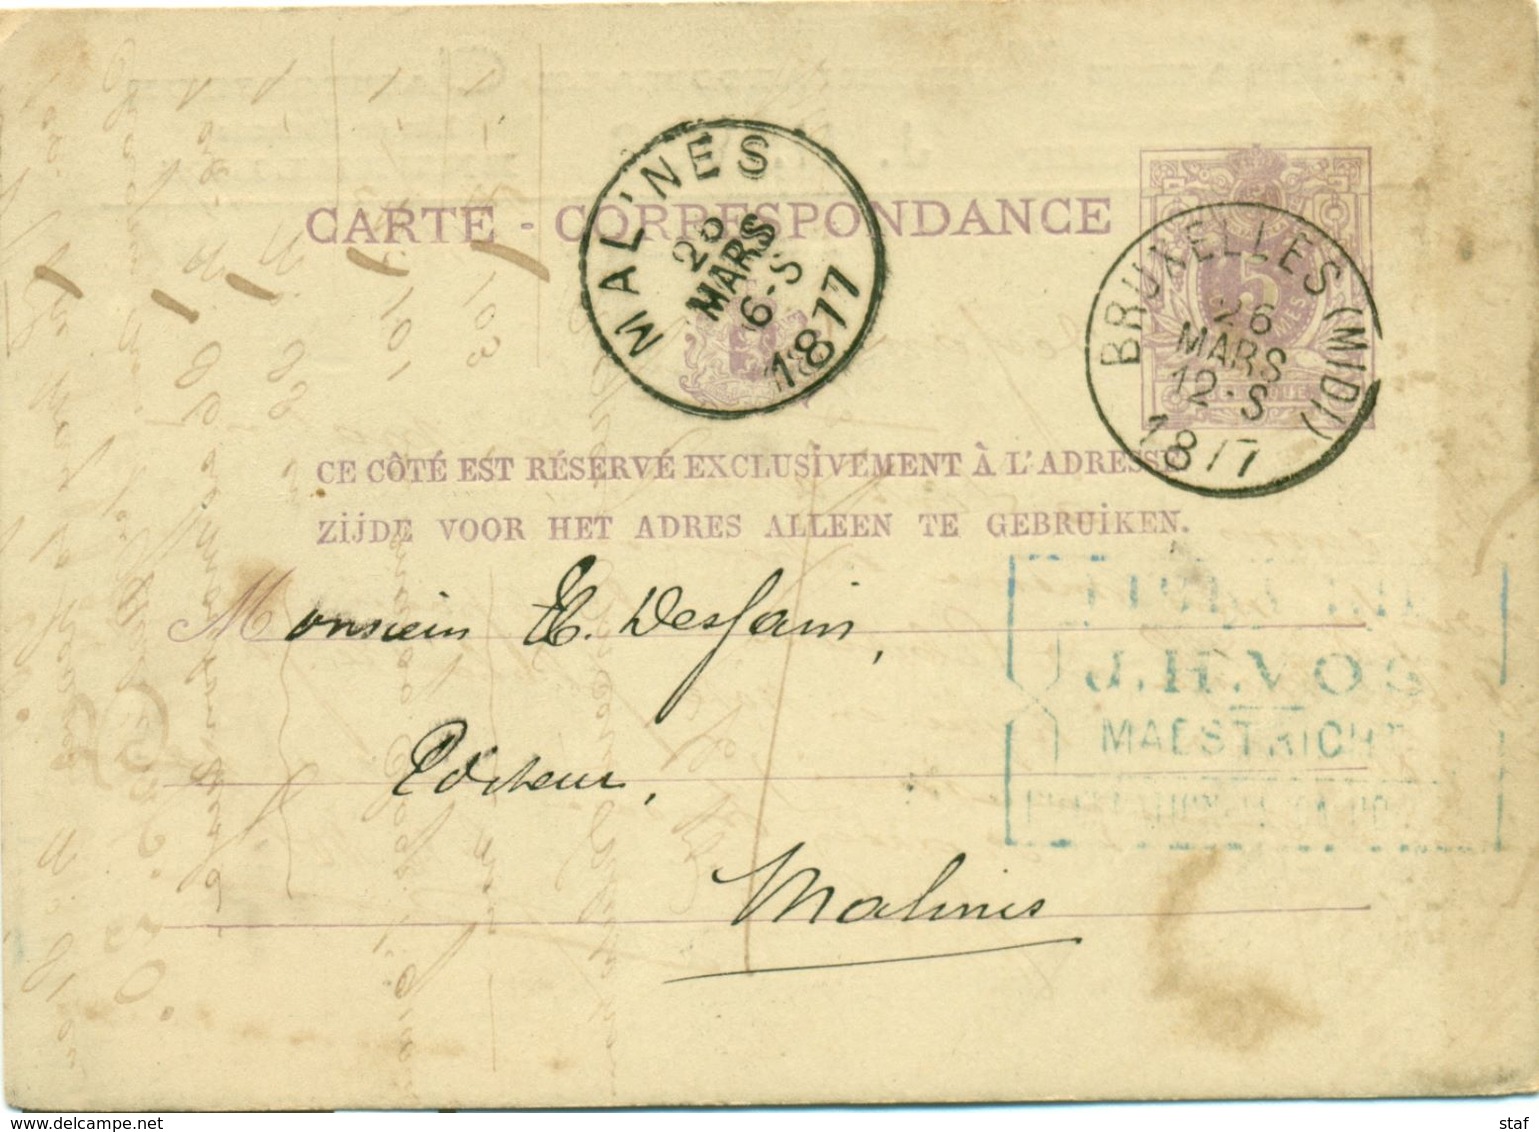 Briefkaart - Carte Correspondance Nr 9 - Afz. Librairie Internationale Catholique J. H. Vos Te Maestricht : 1877 - Drukkerij & Papieren